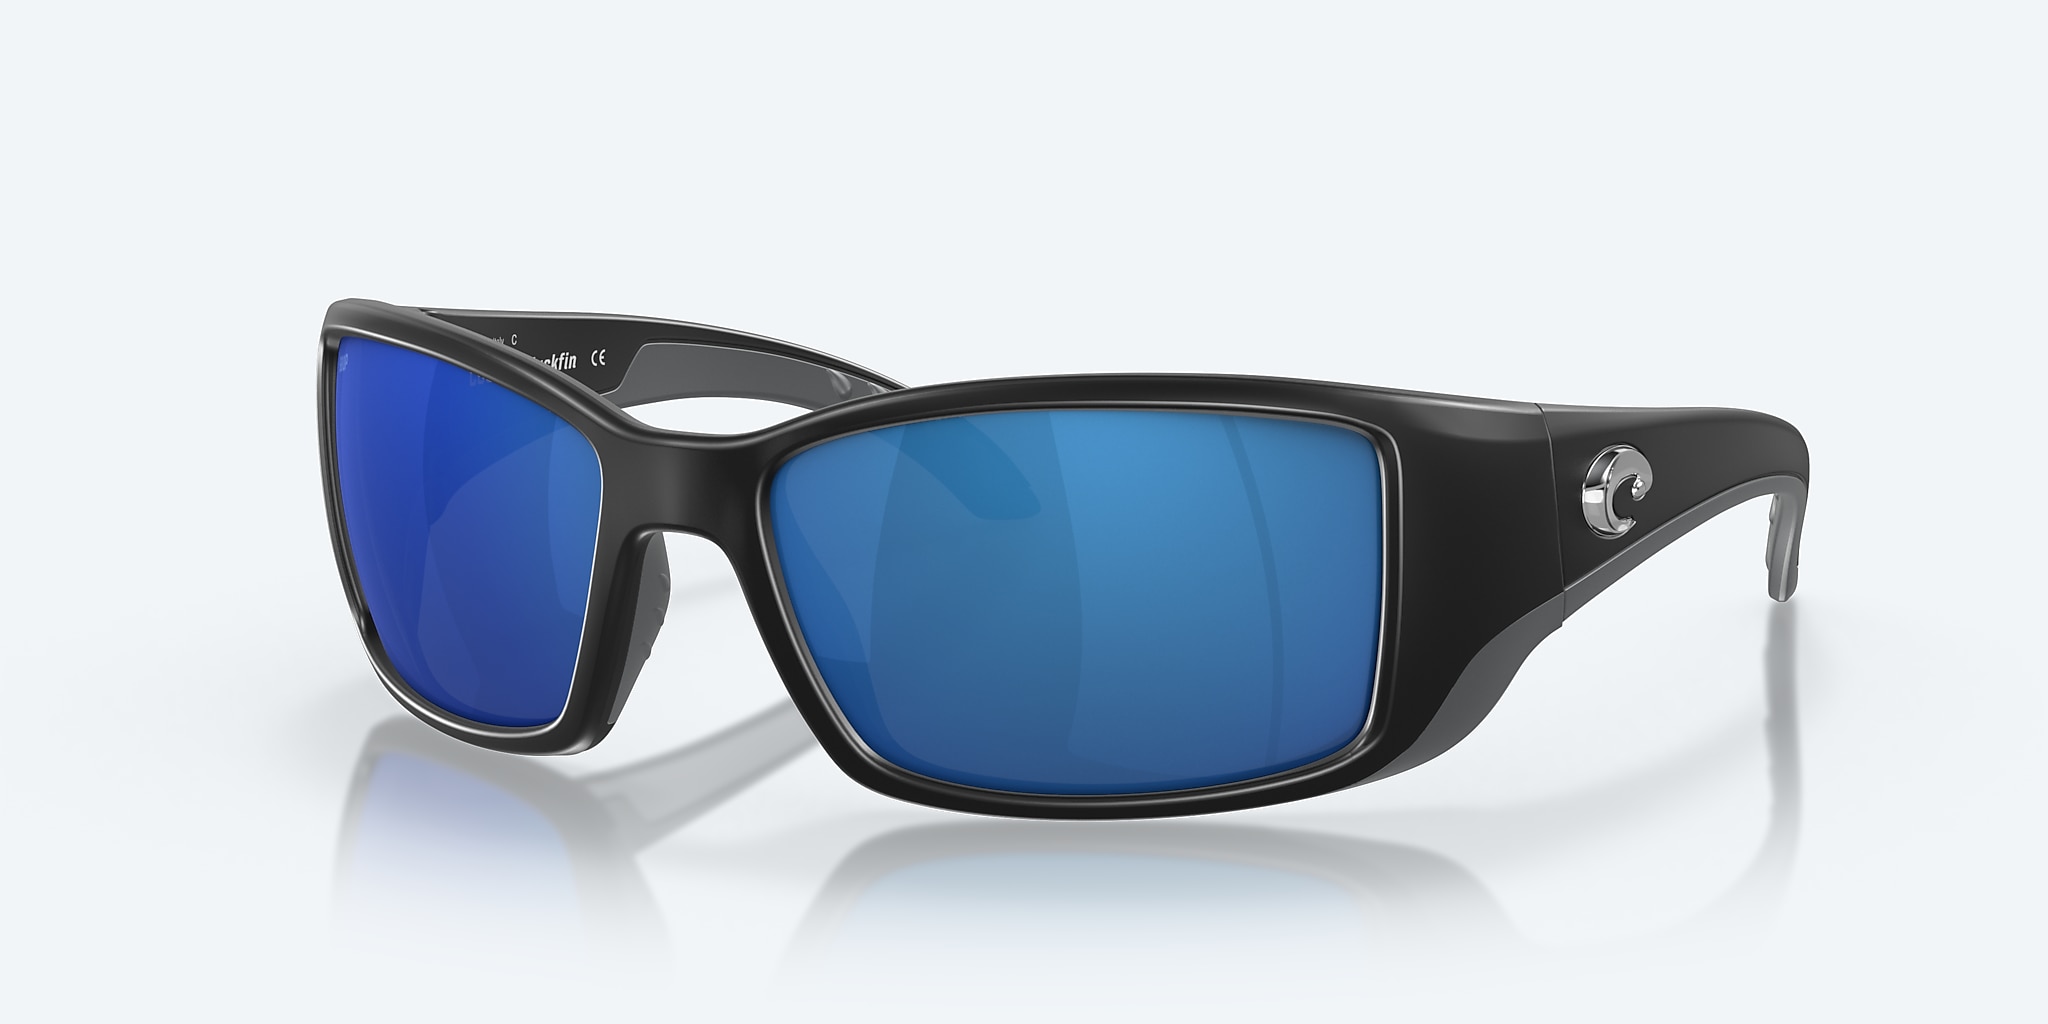 Blackfin Realtree XTRA Camo Sunglasses with Blue Mirror 400G Lenses by  Costa Del Mar